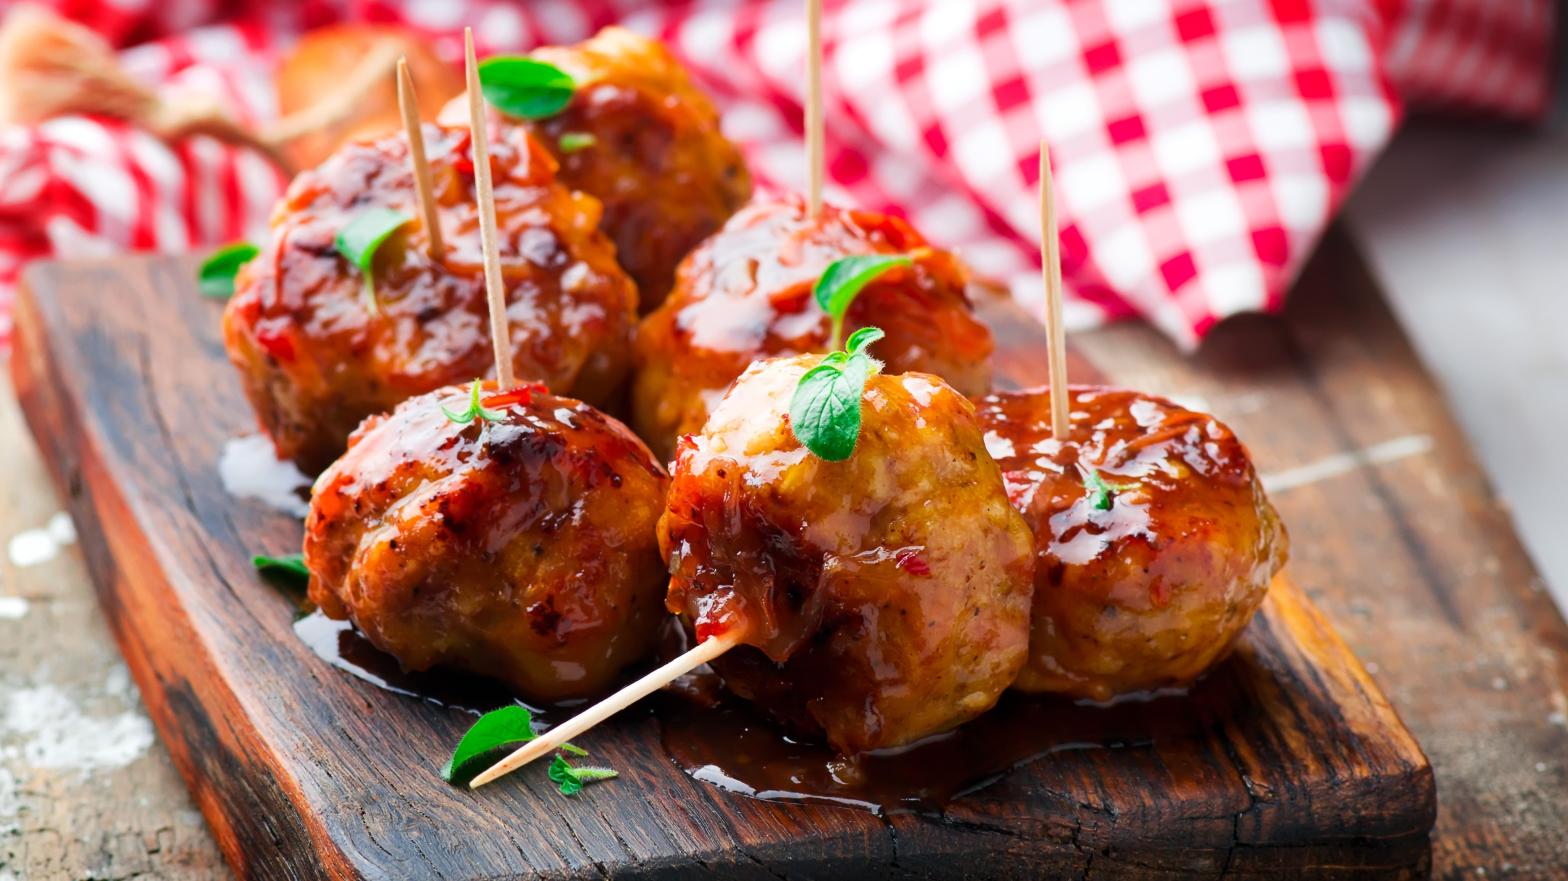 Five Ways to Make Even Better Meatballs